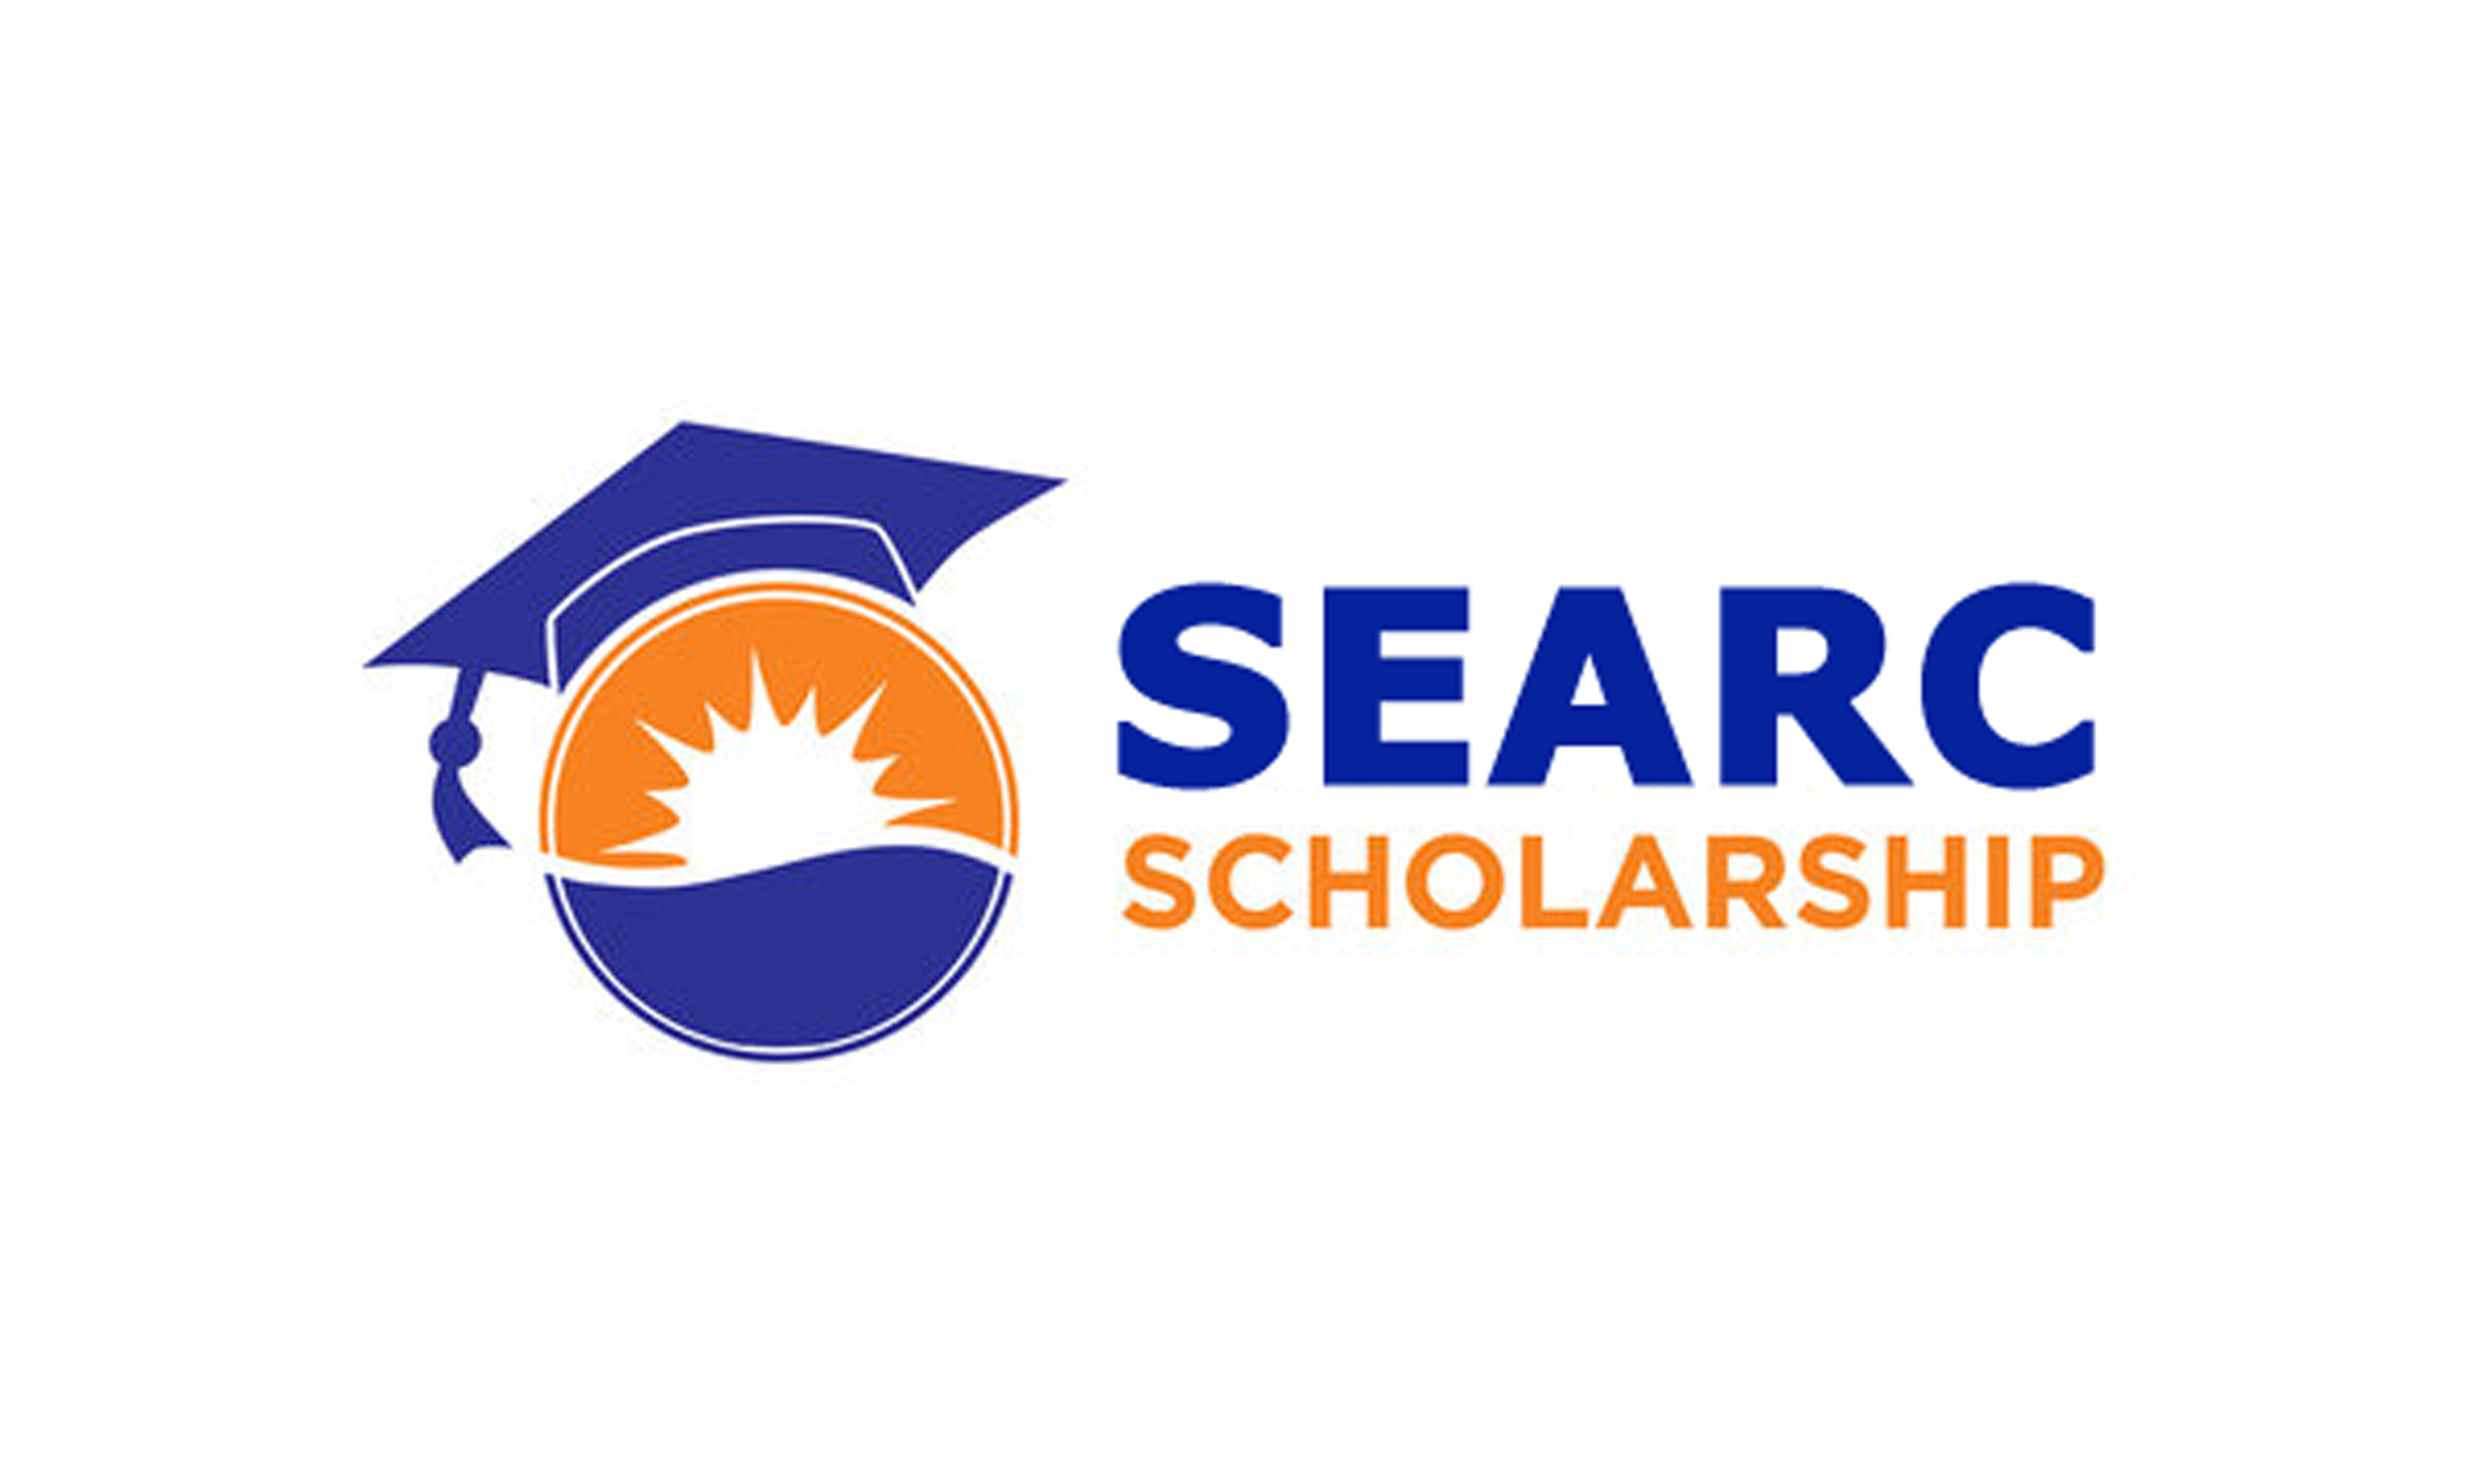 SEARC Scholarship, Registration No. 192448.